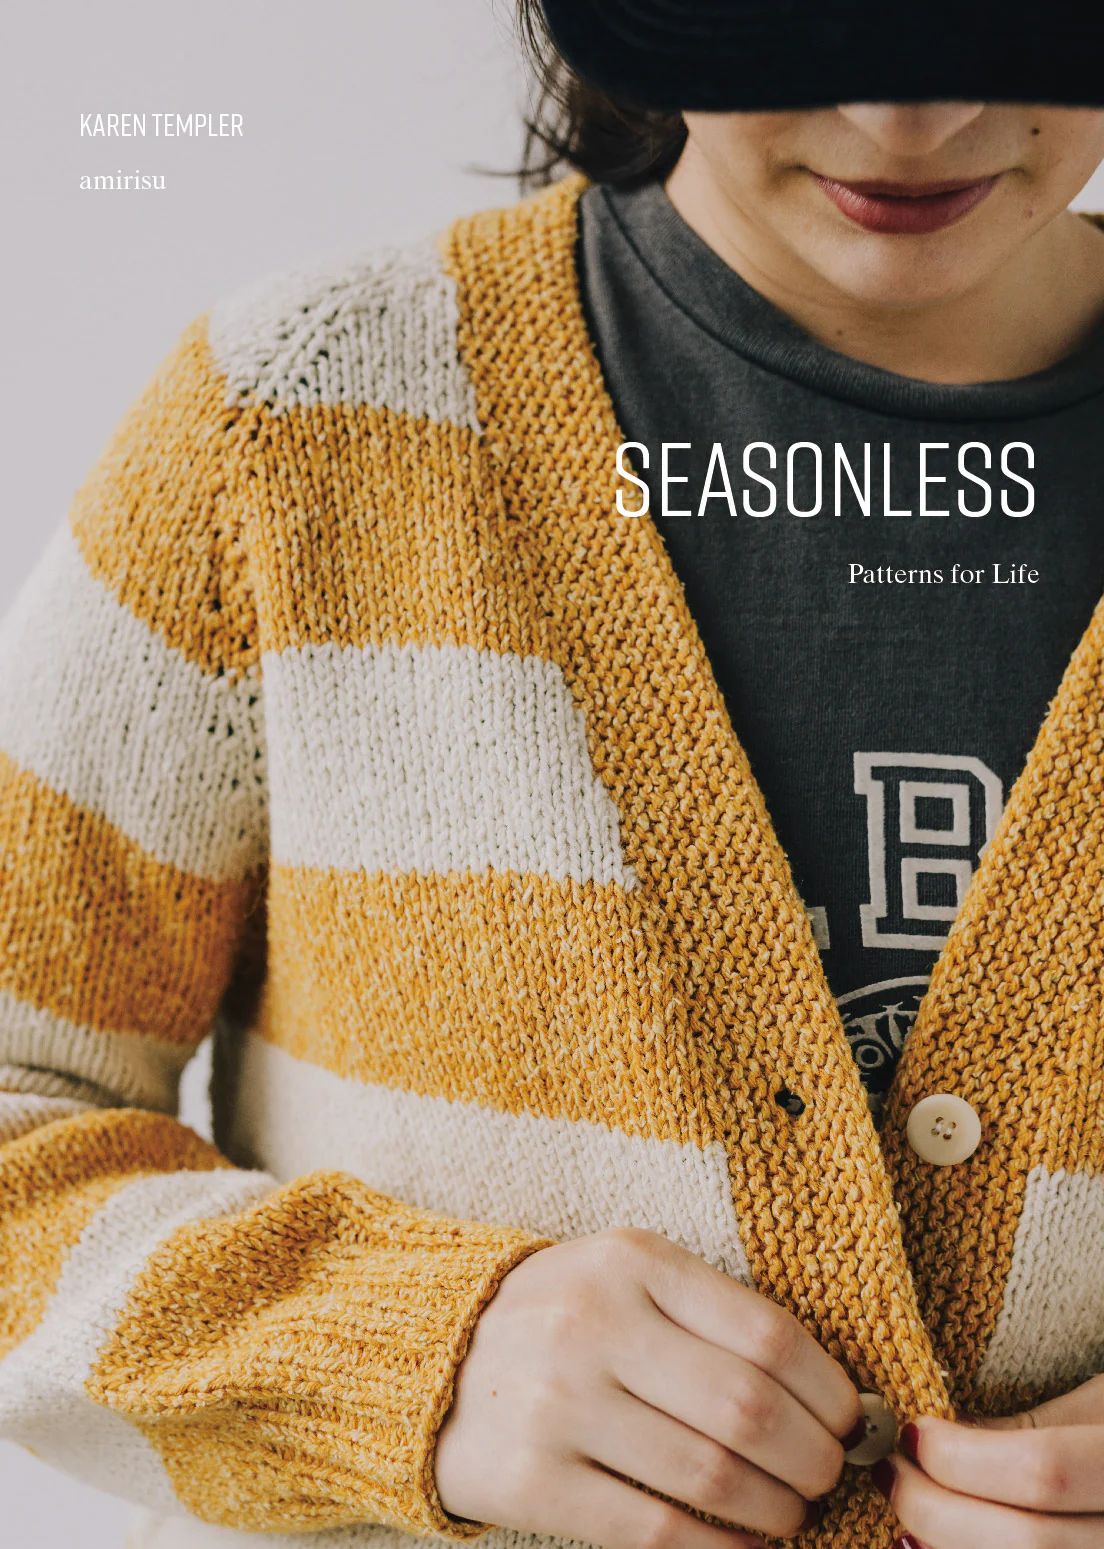 Amirisu Seasonless - Patterns for Life